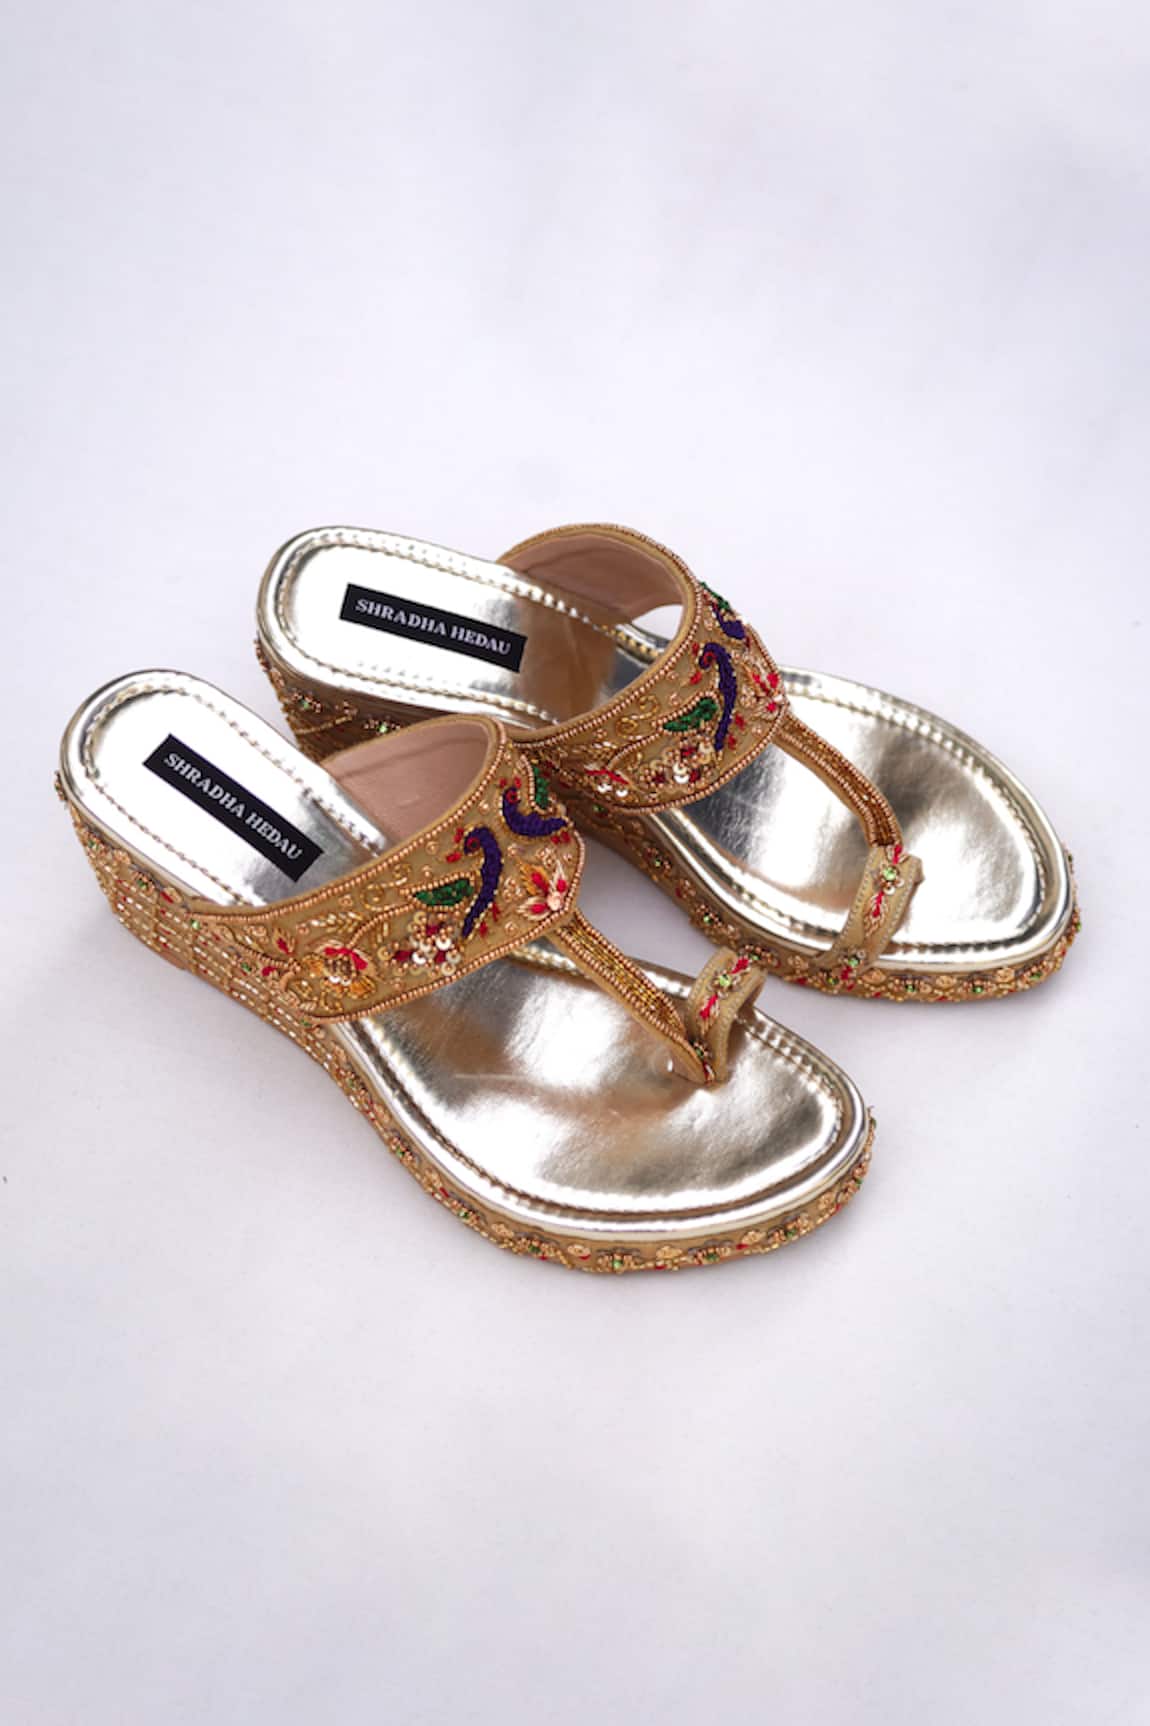 Shradha Hedau Footwear Couture Tania Embroidered Wedges